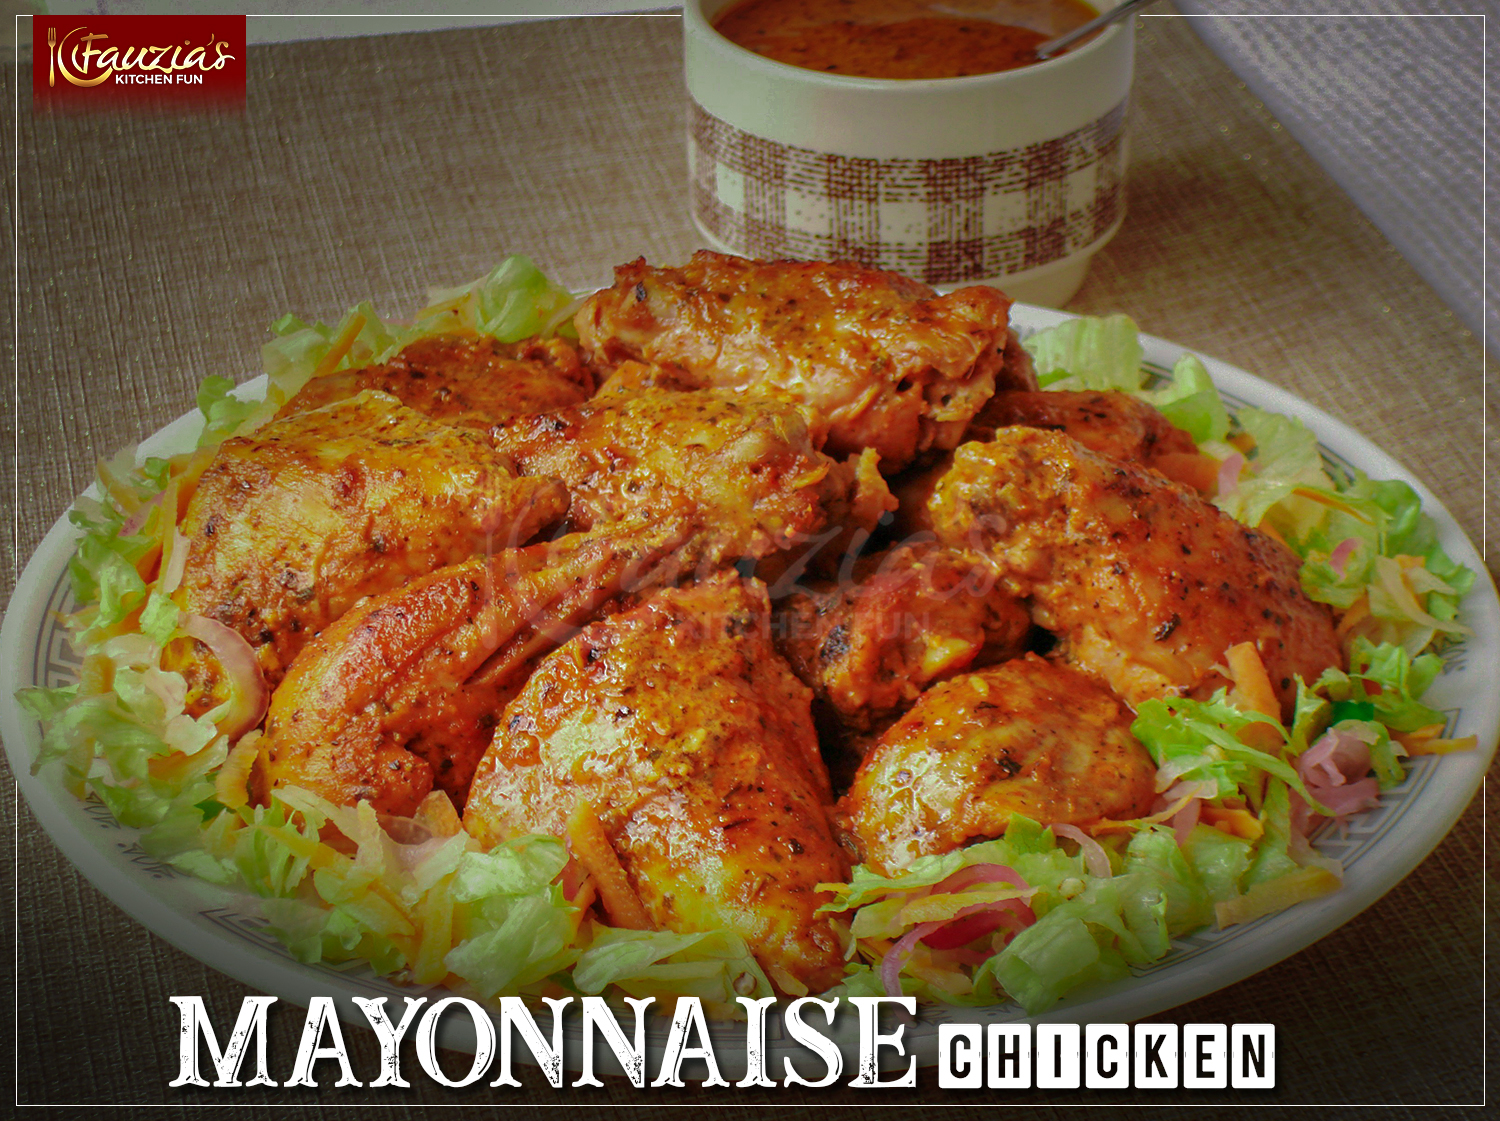 Mayonnaise Chicken Fauzias Kitchen Fun 